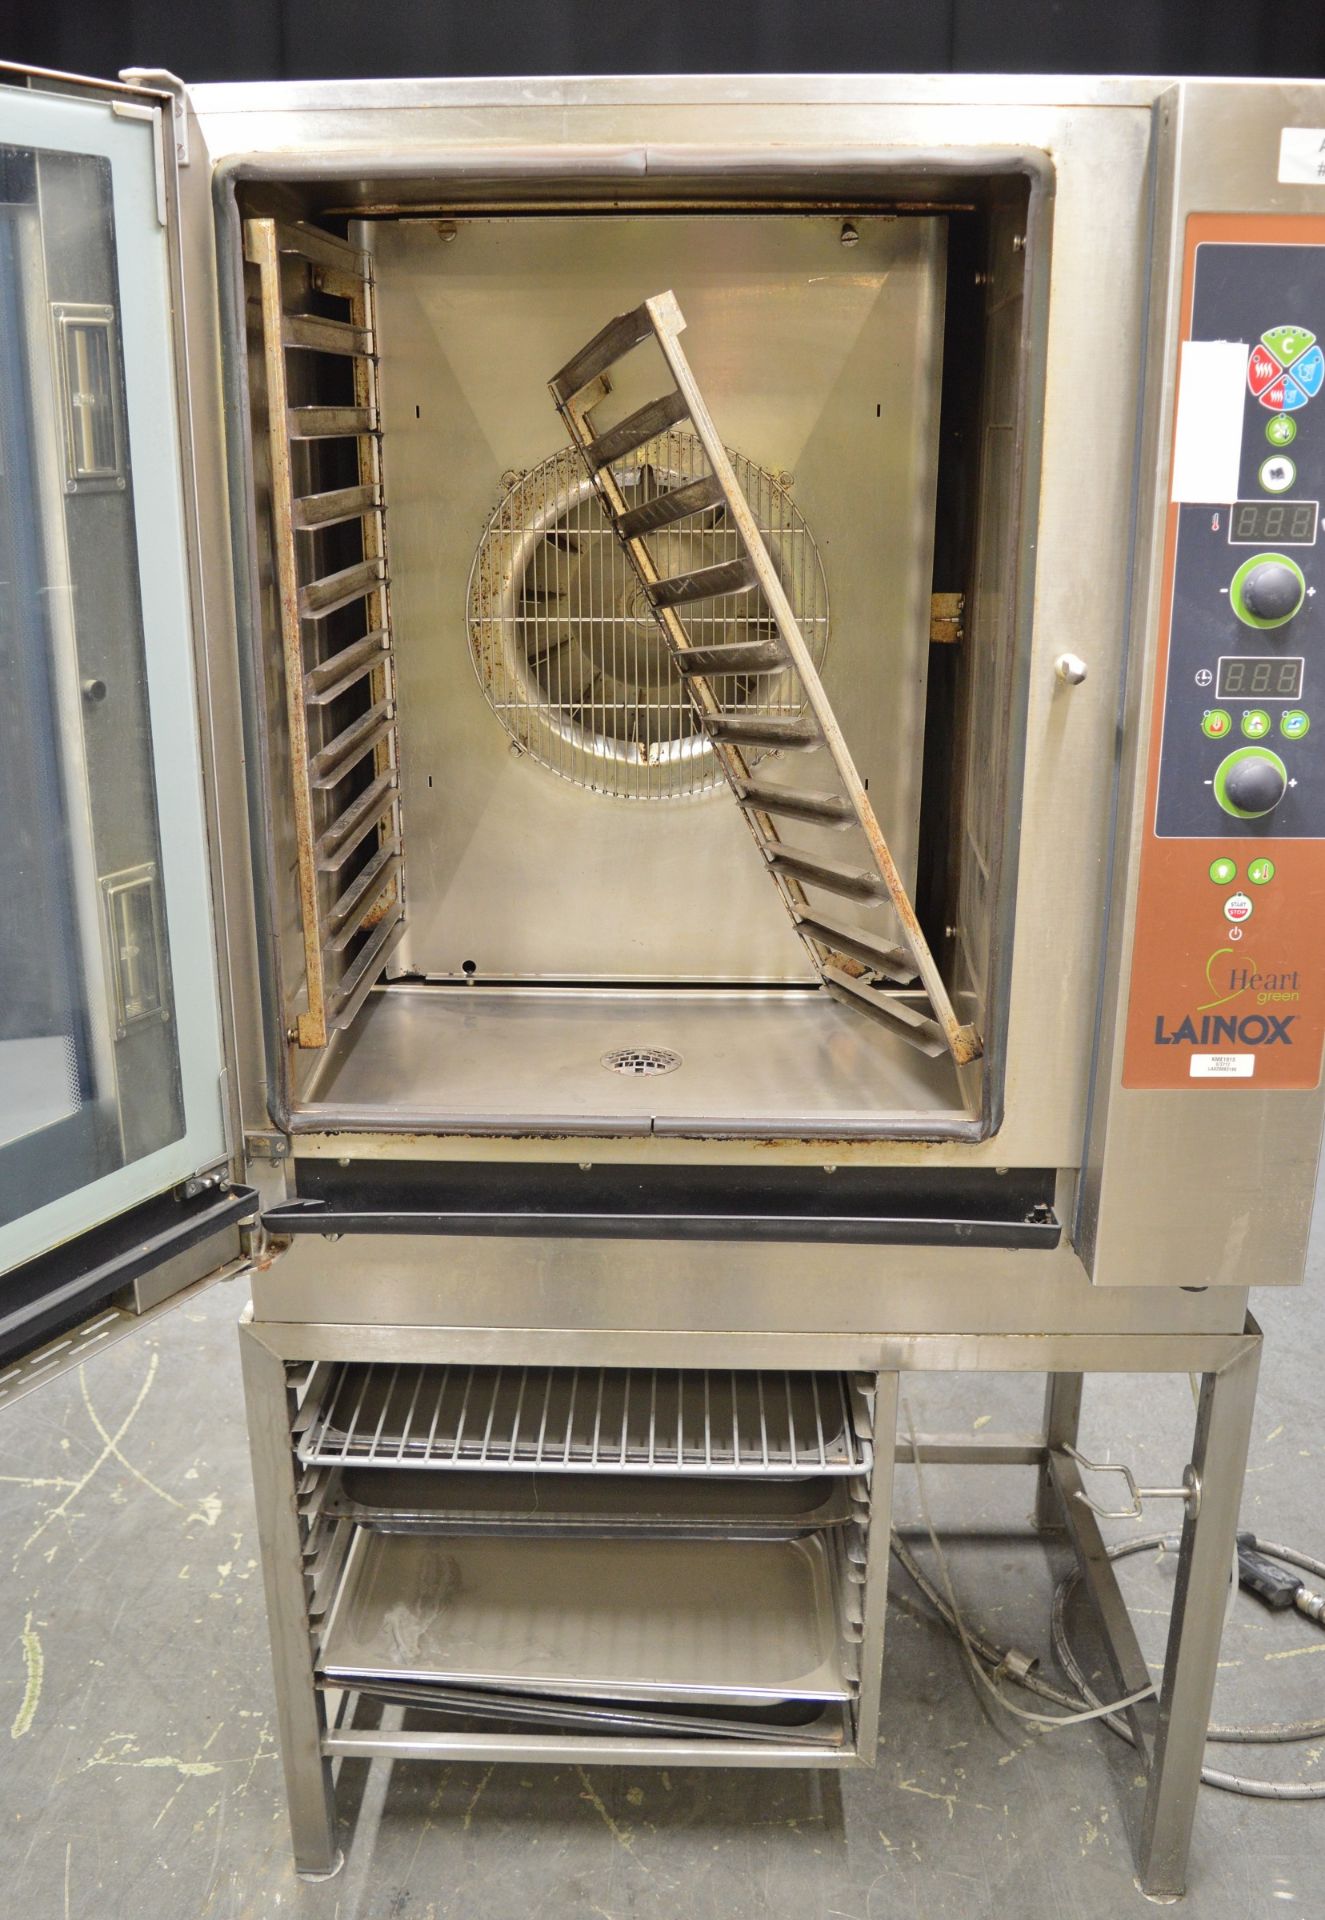 Lainox KME101S Electric Combi Oven - 400v - Image 5 of 11